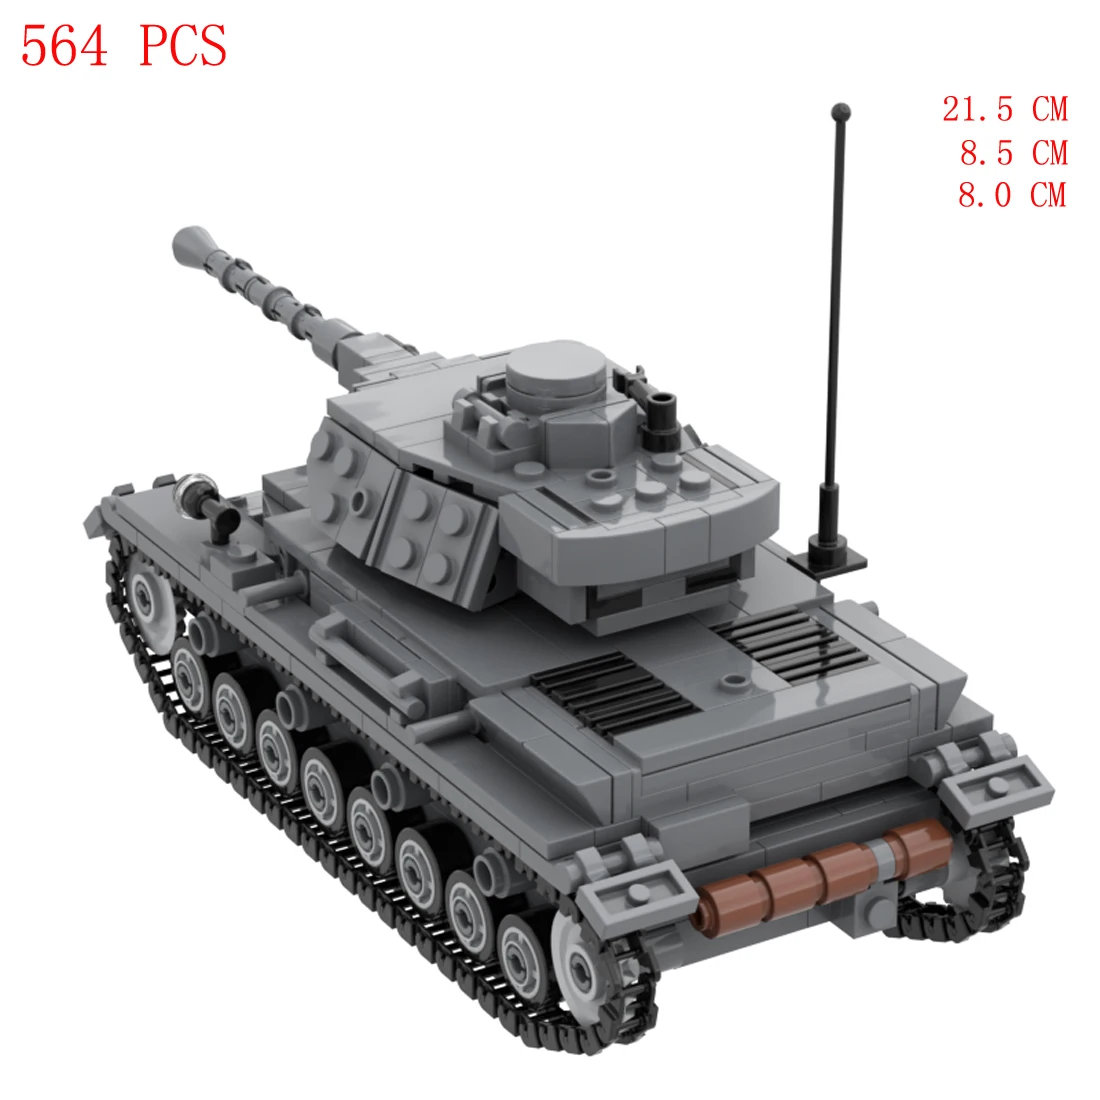 

hot wwII military vehicles Germany Army Panzerkampfwagen IV F tank war equipment model Building Blocks weapons bricks toys gift